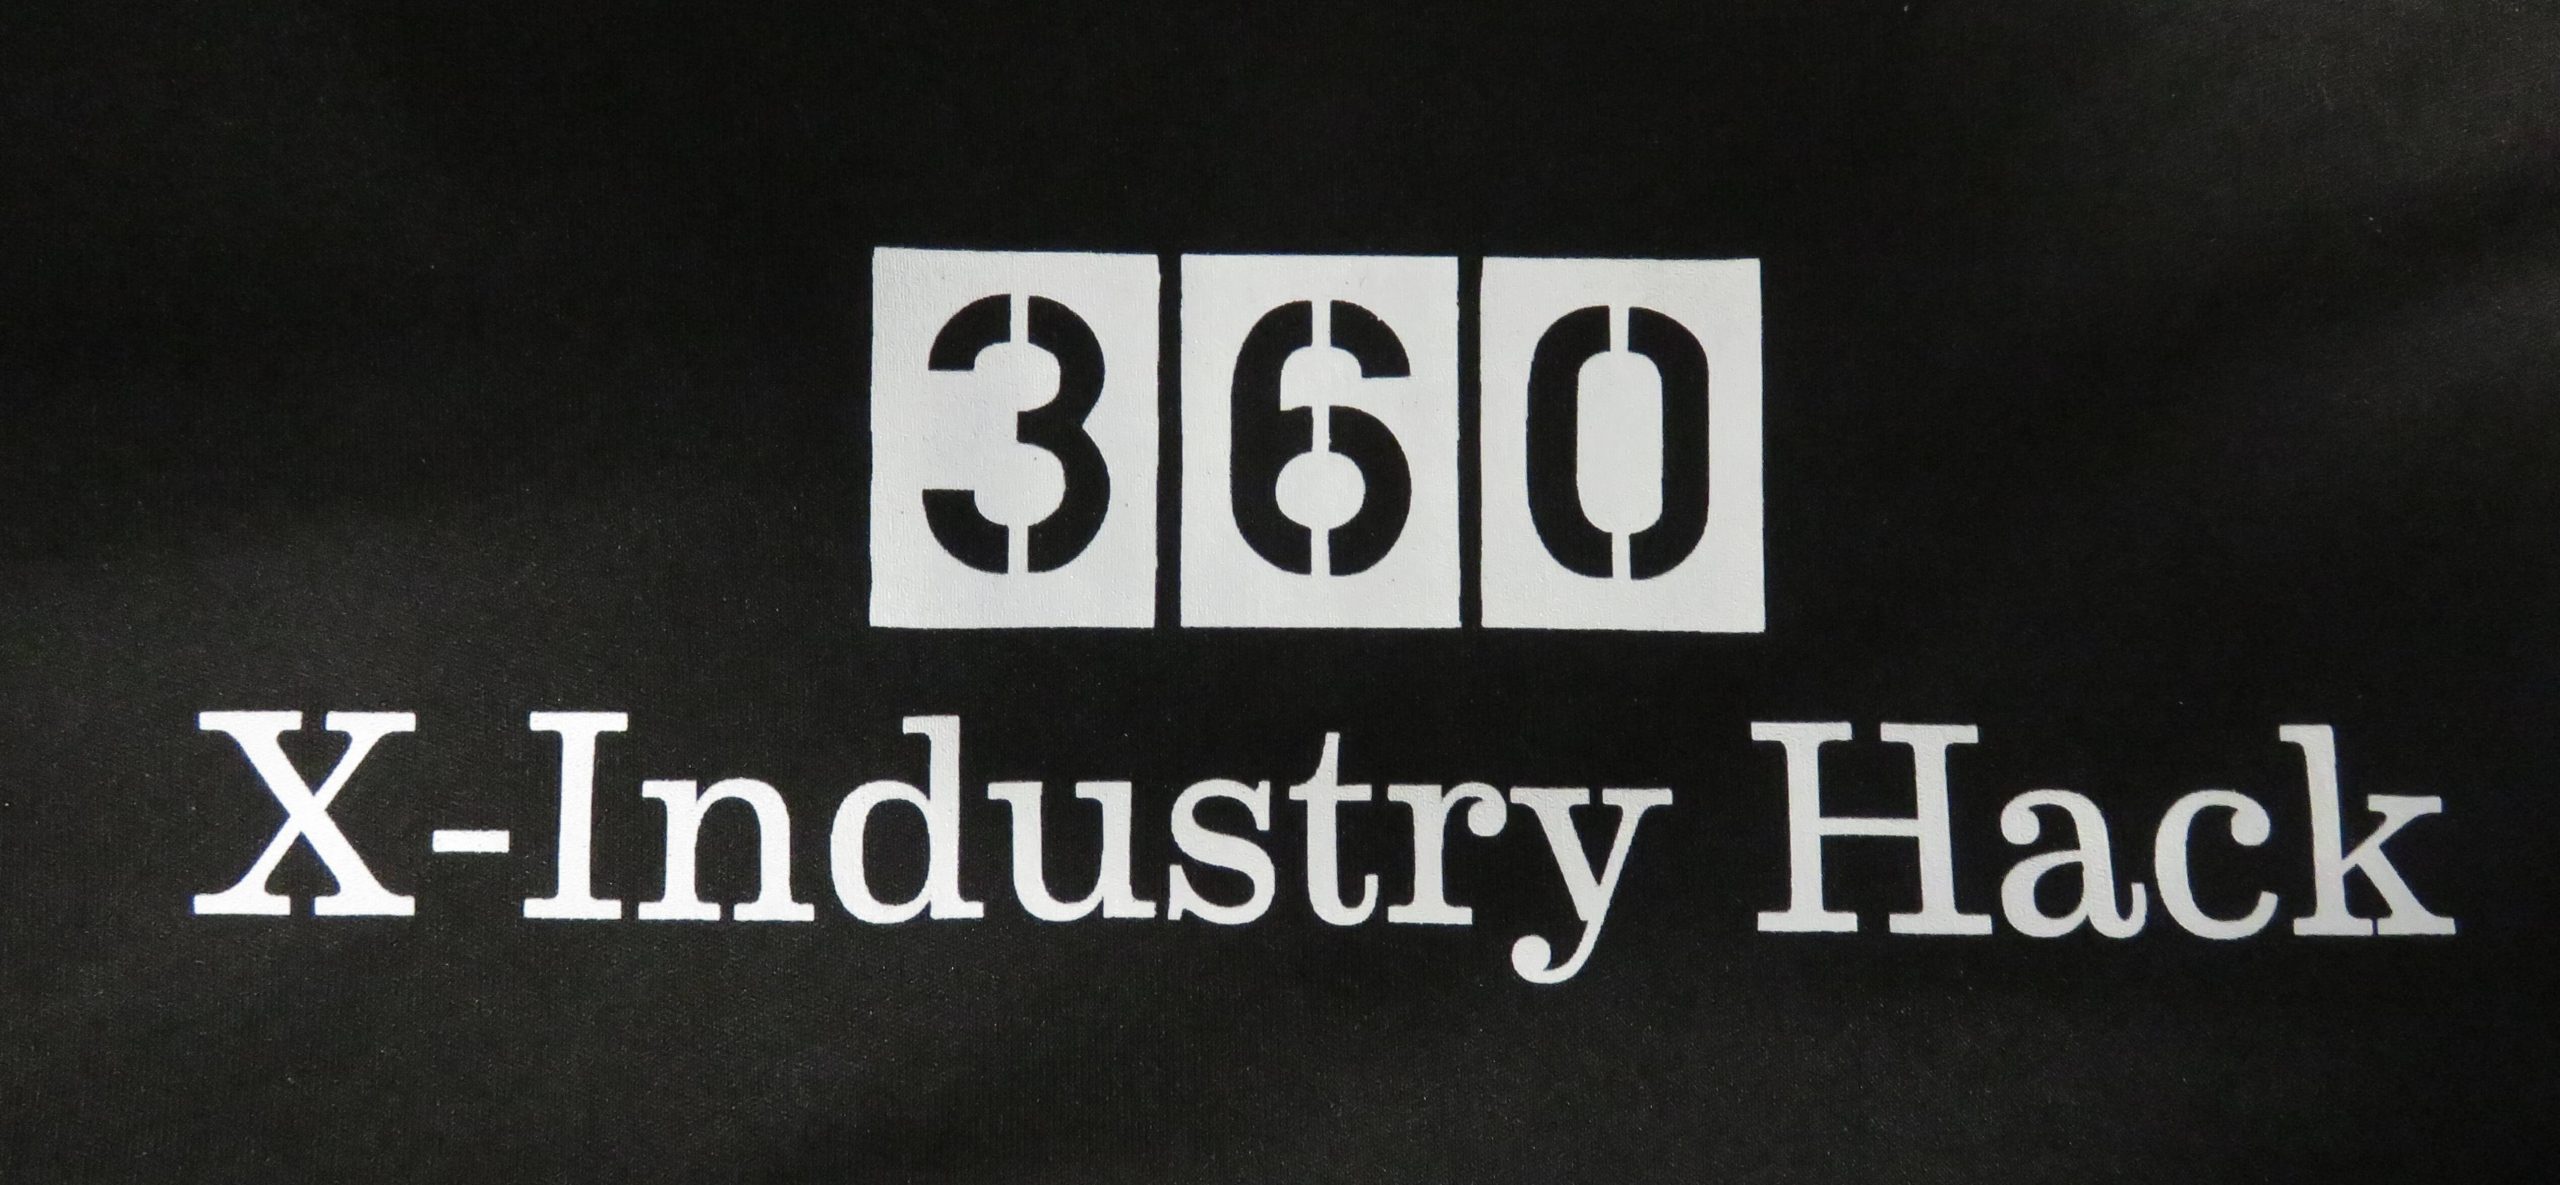 360 Cross-Industry Hackathon logo